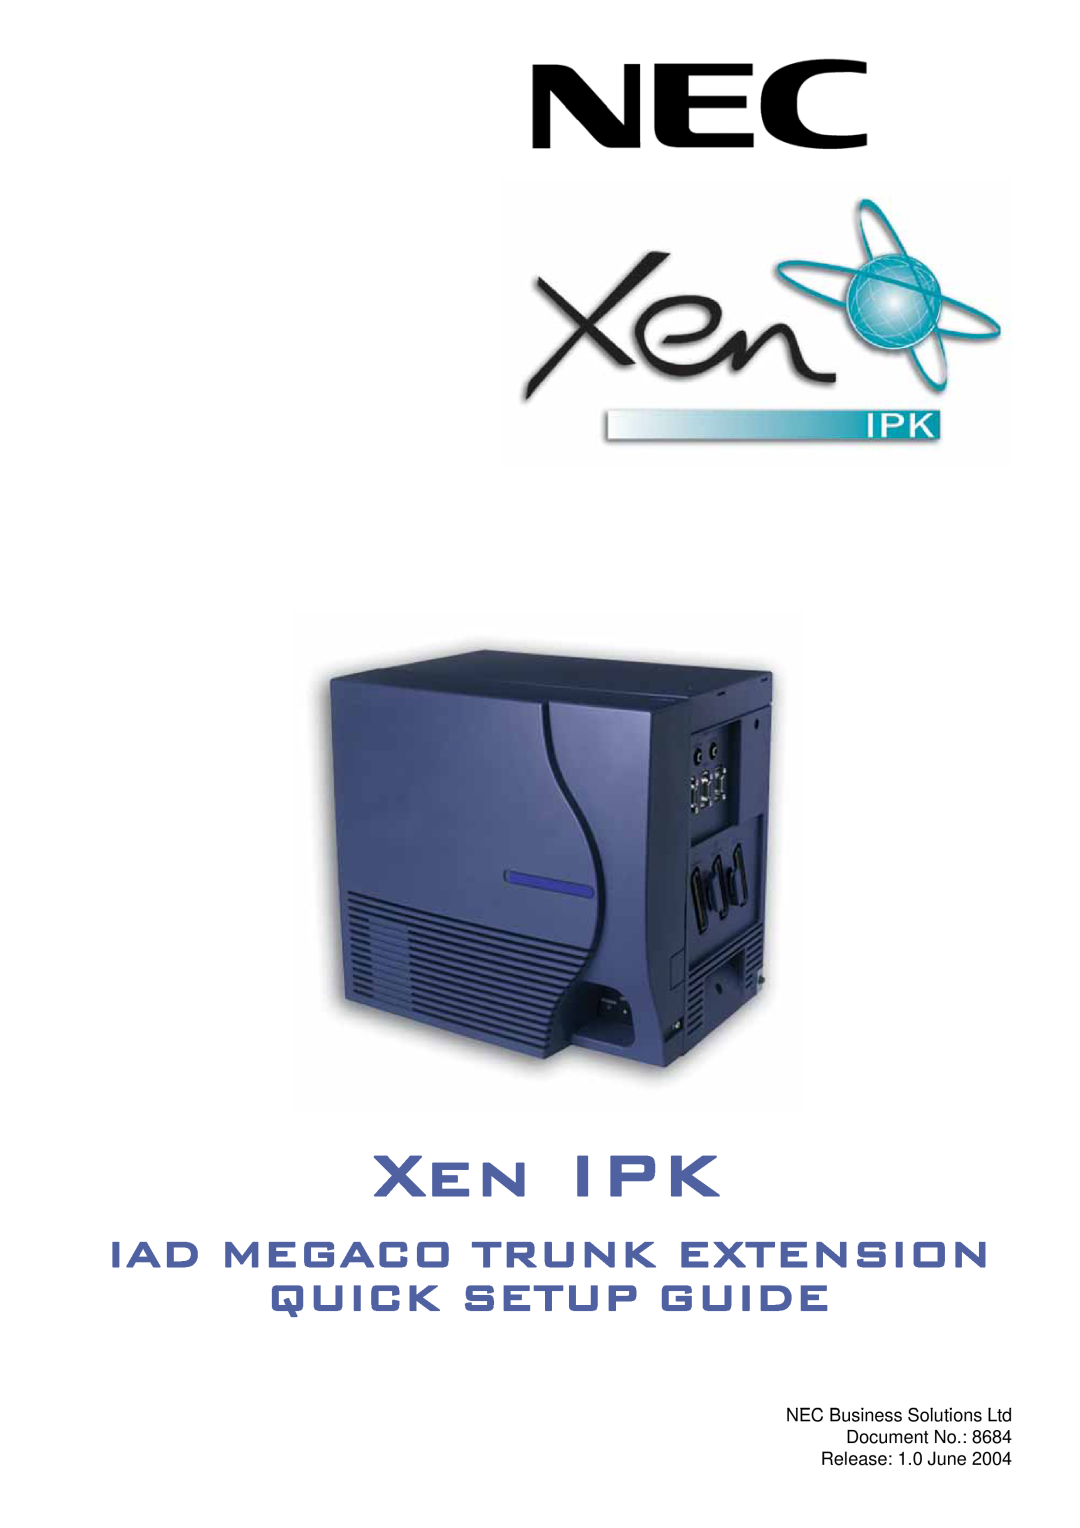 NEC XEN IPK setup guide Xen IPK, Iad Megaco Trunk Extension Quick Setup Guide, Release 1.0 June 